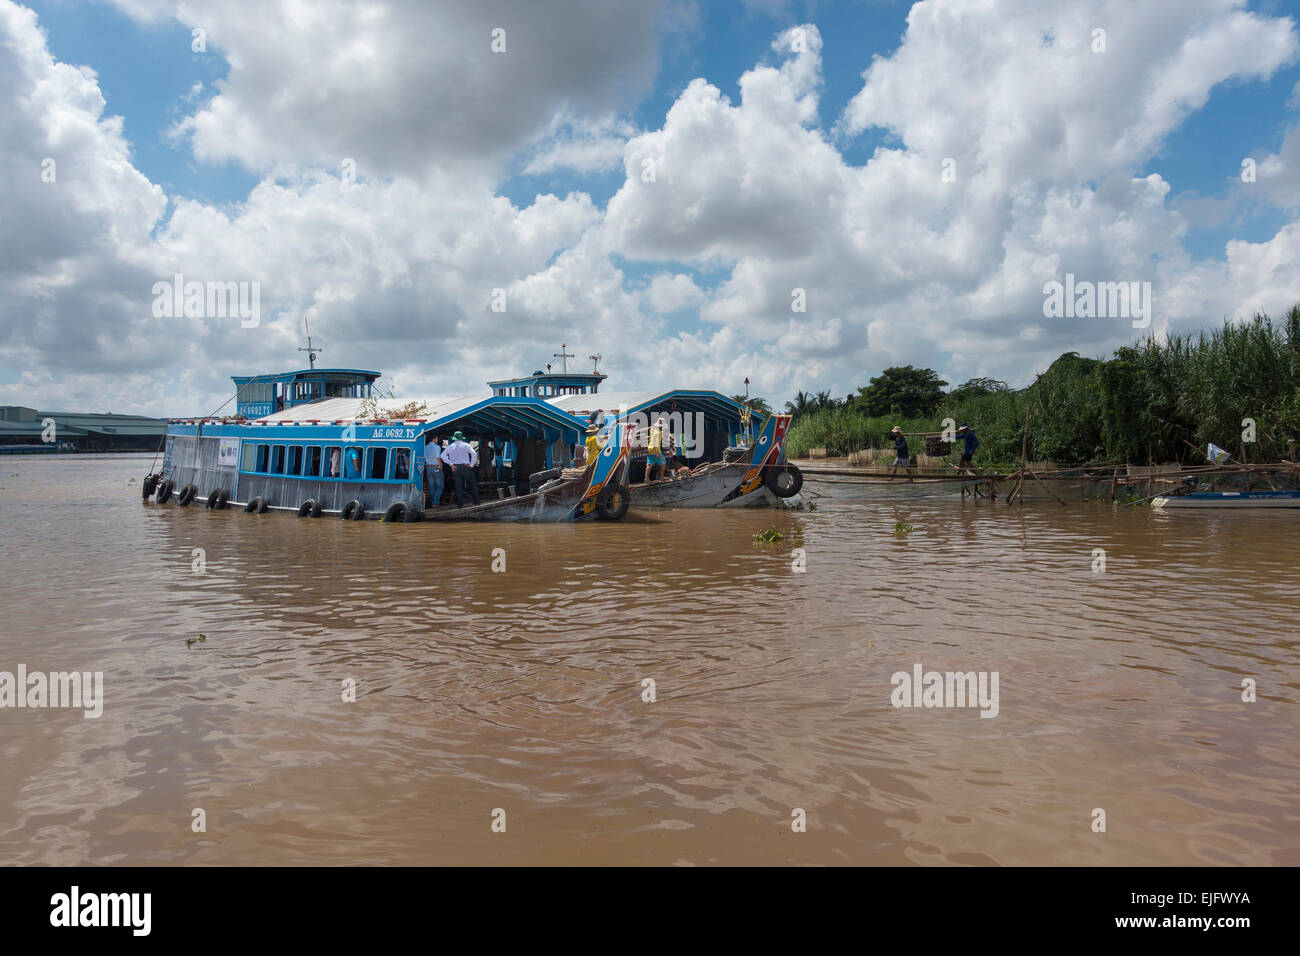 Buques de transporte por el río Mekong, el delta del Mekong, Vietnam Asia Foto de stock